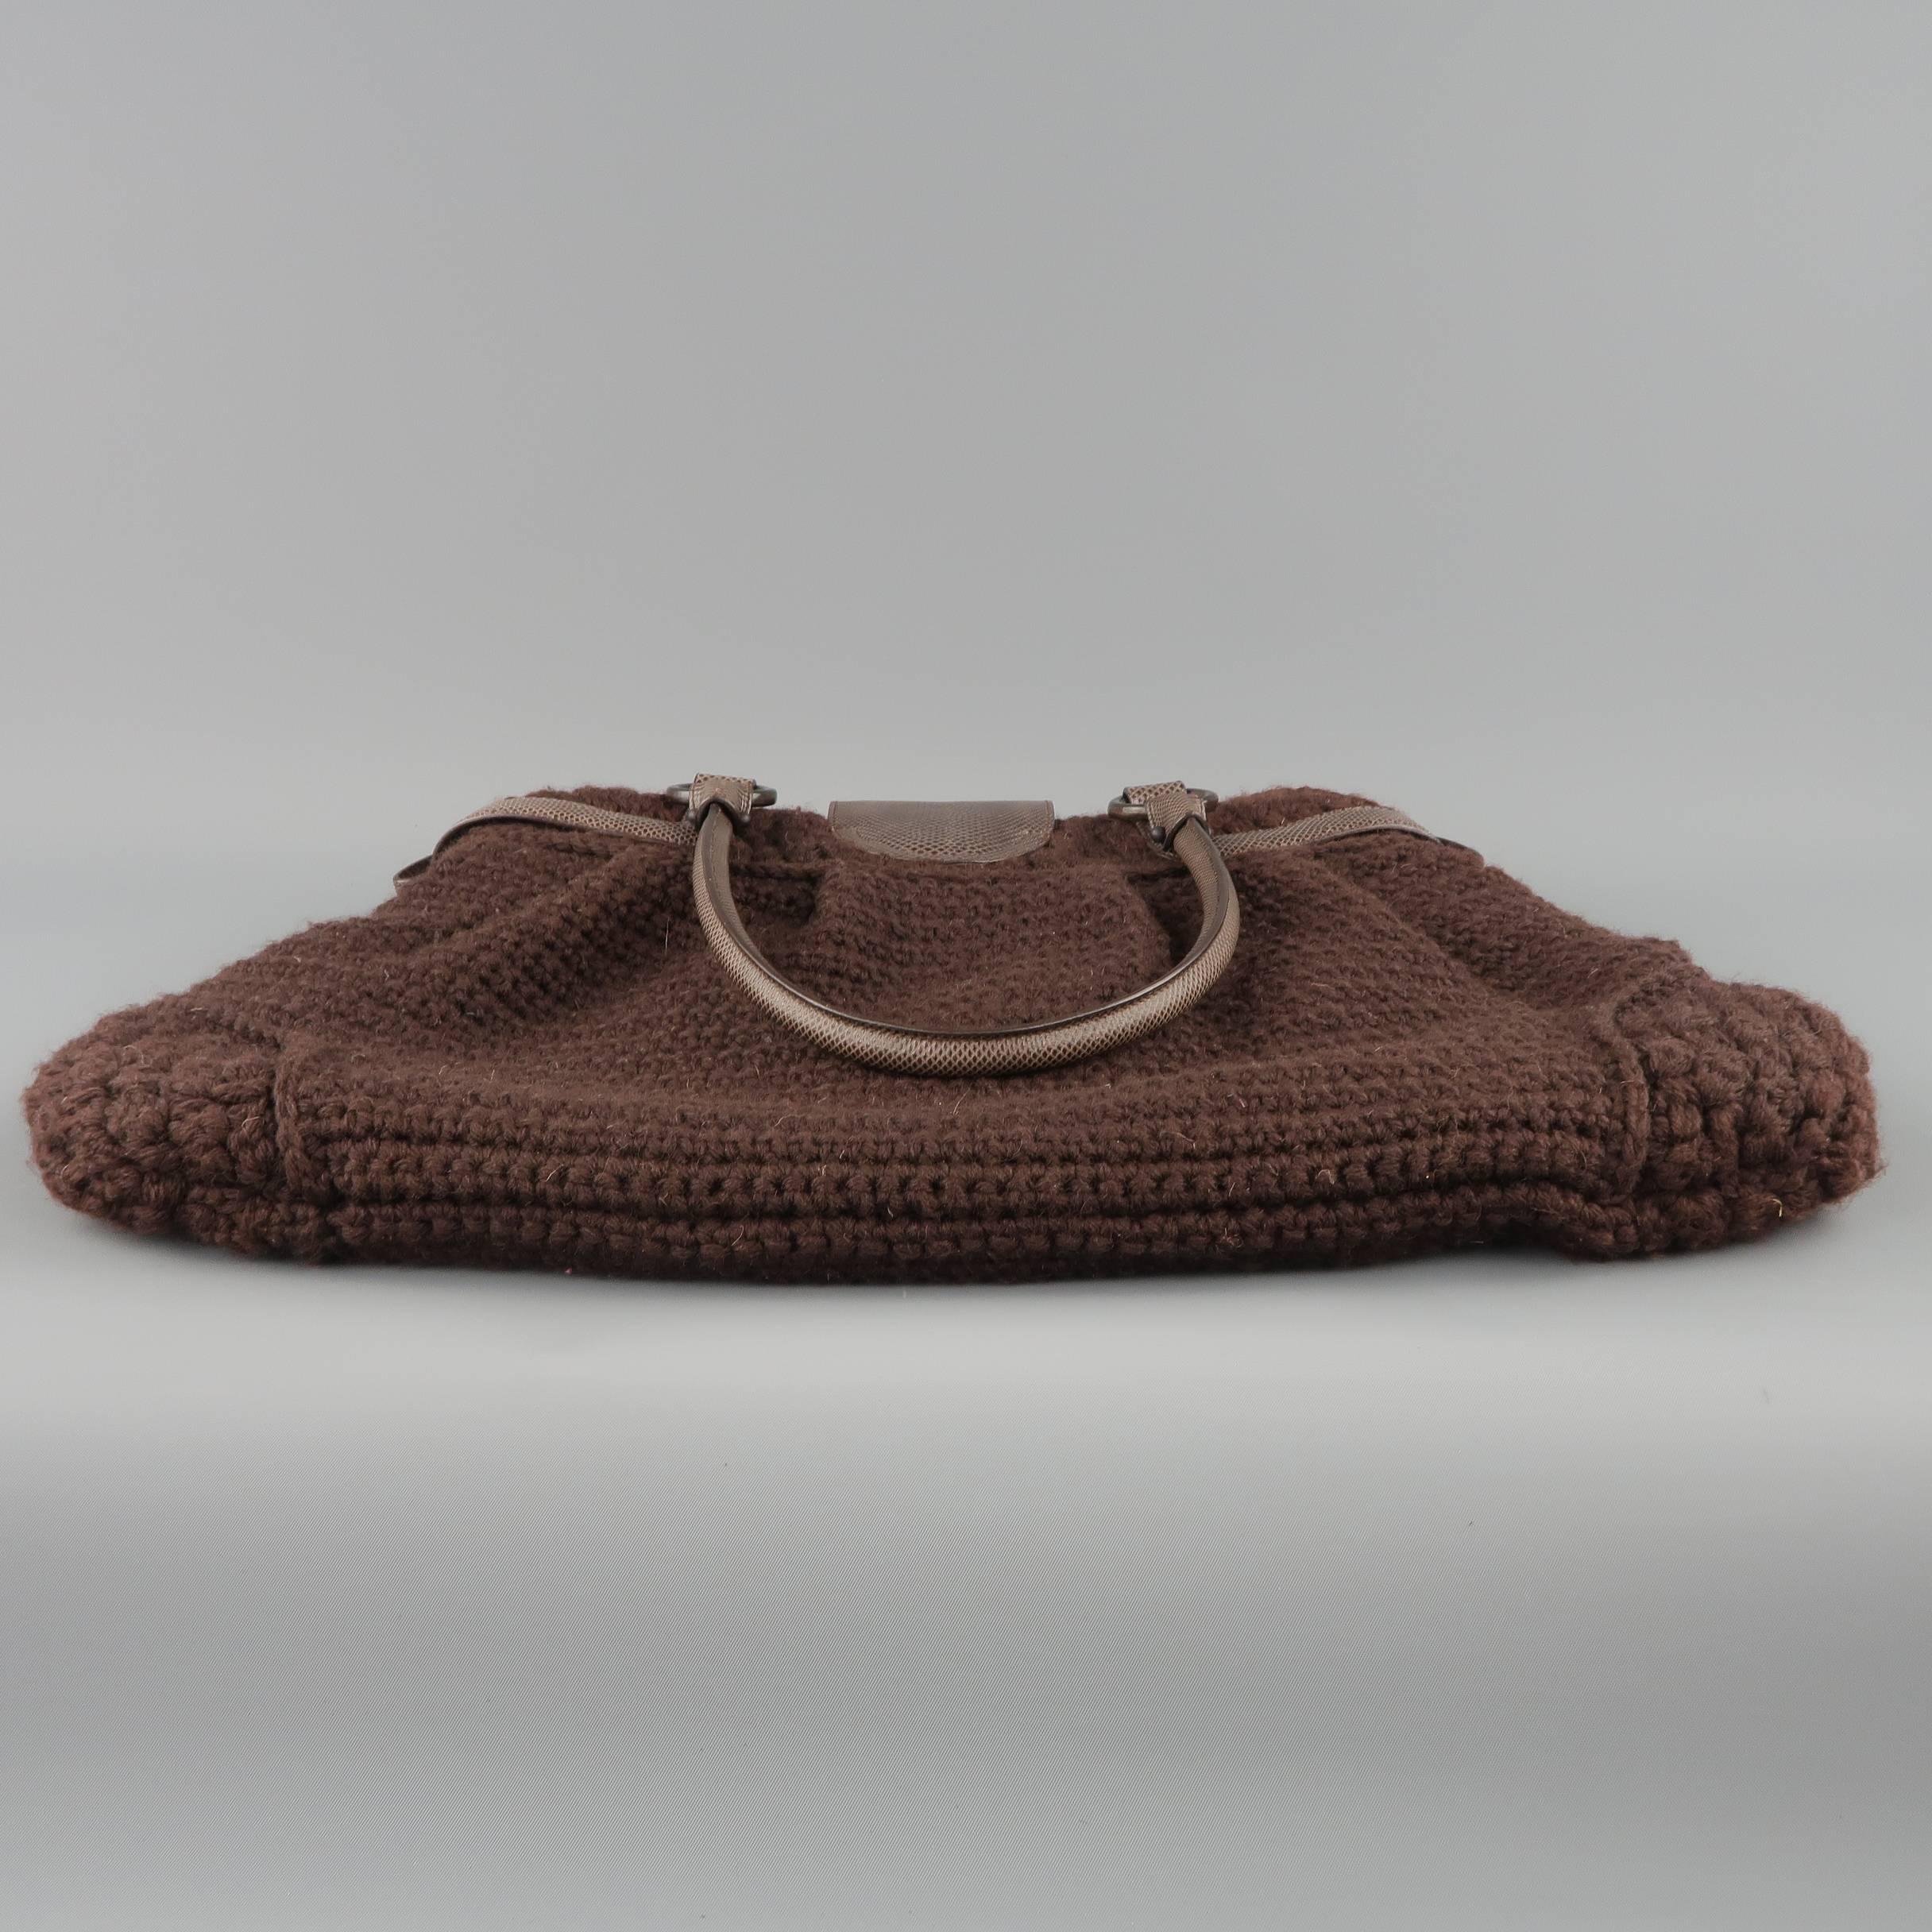 SALVATORE FERRAGAMO Brown Chrochet Knit Leather Top Handles Handbag 2